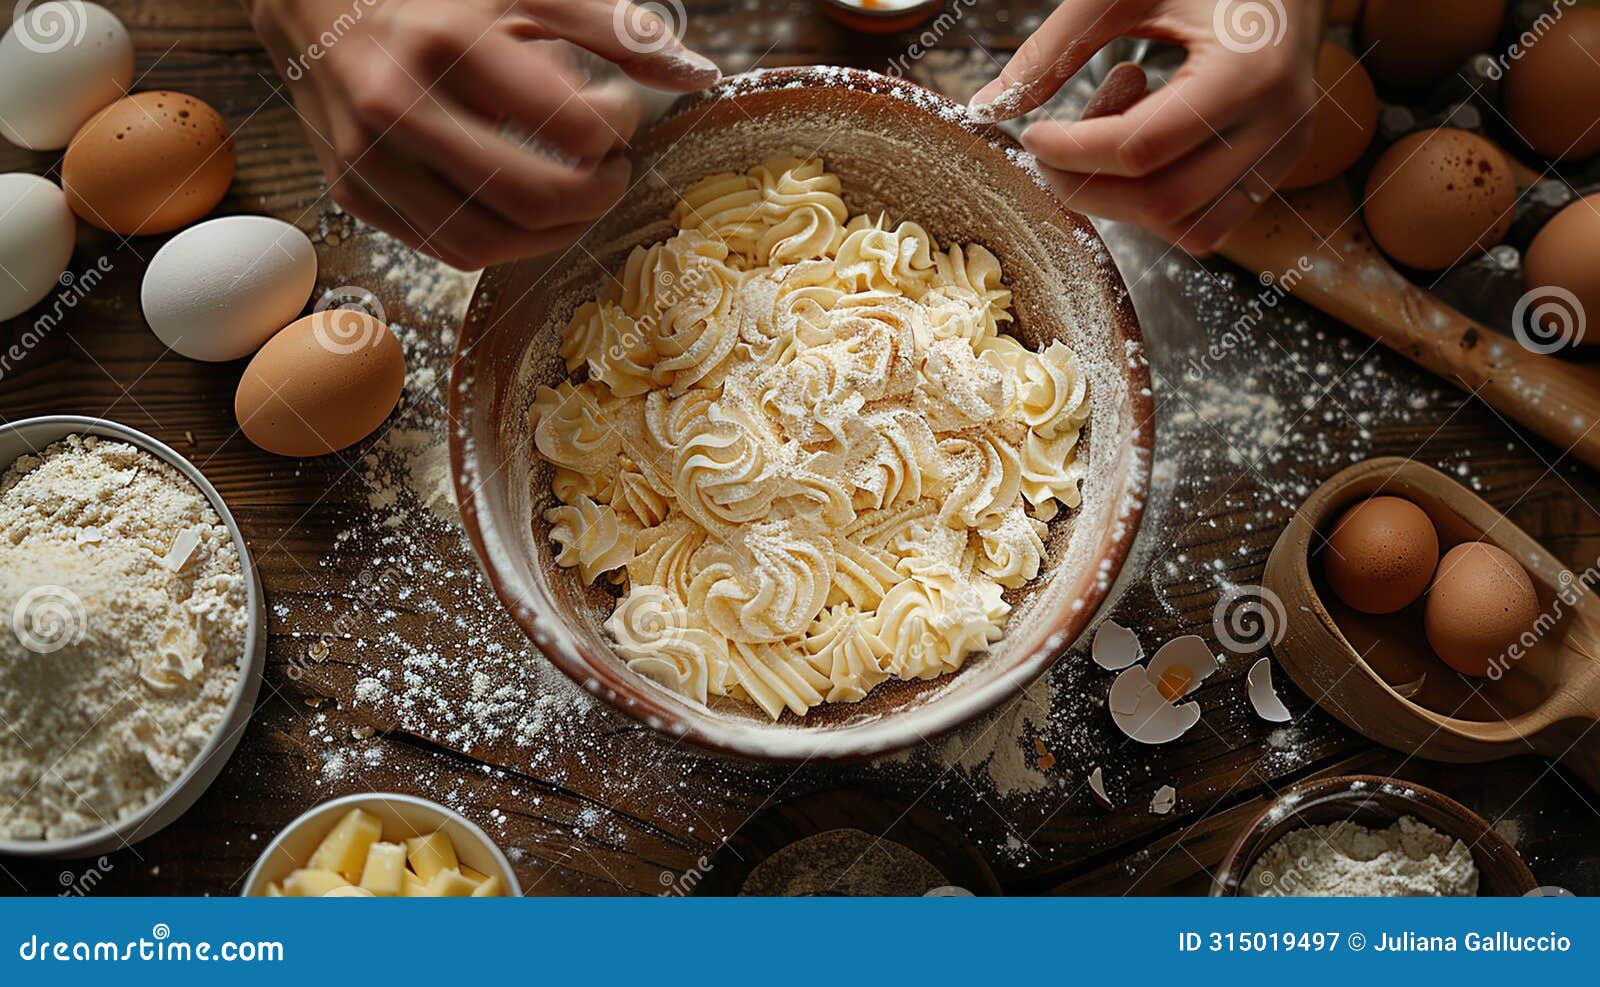 hands shaping homemade pasta